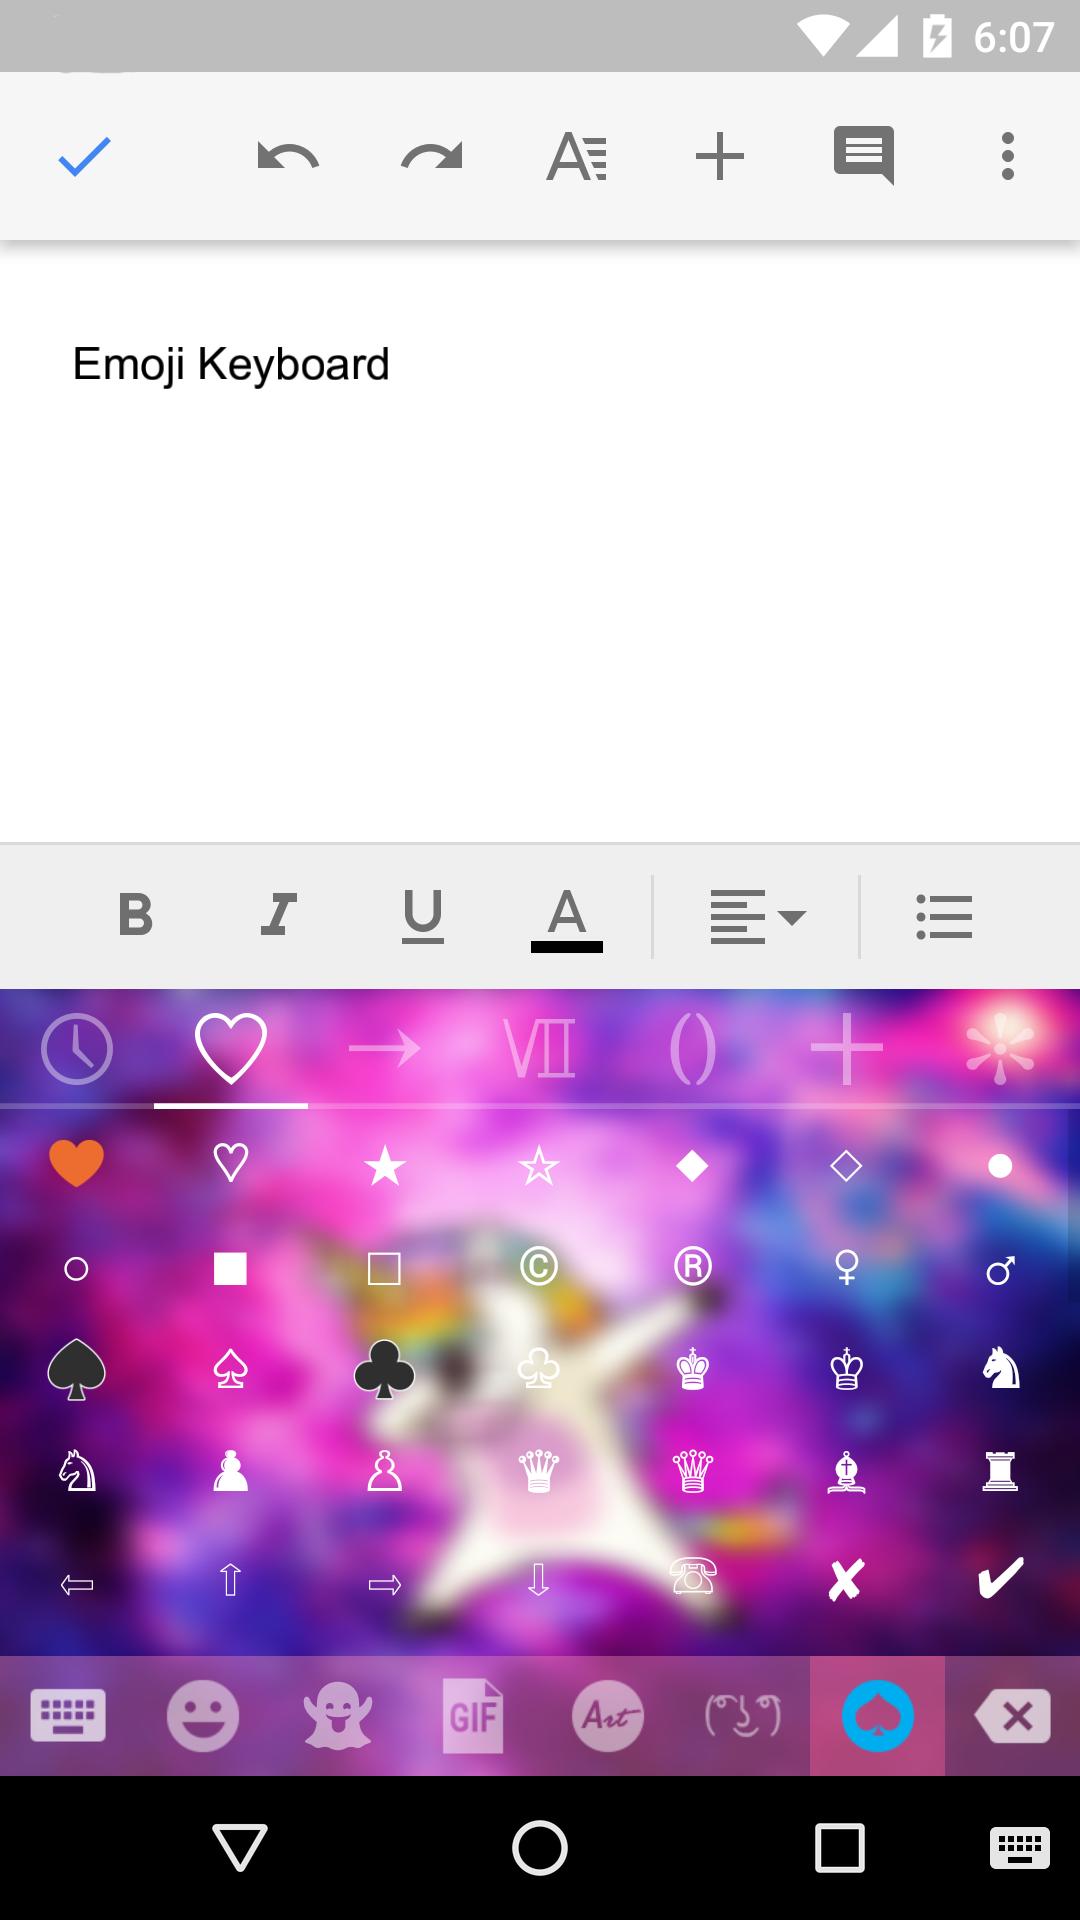 Galaxy Dab Unicorn Emoji Gif Keyboard Wallpaper For Android Apk Download